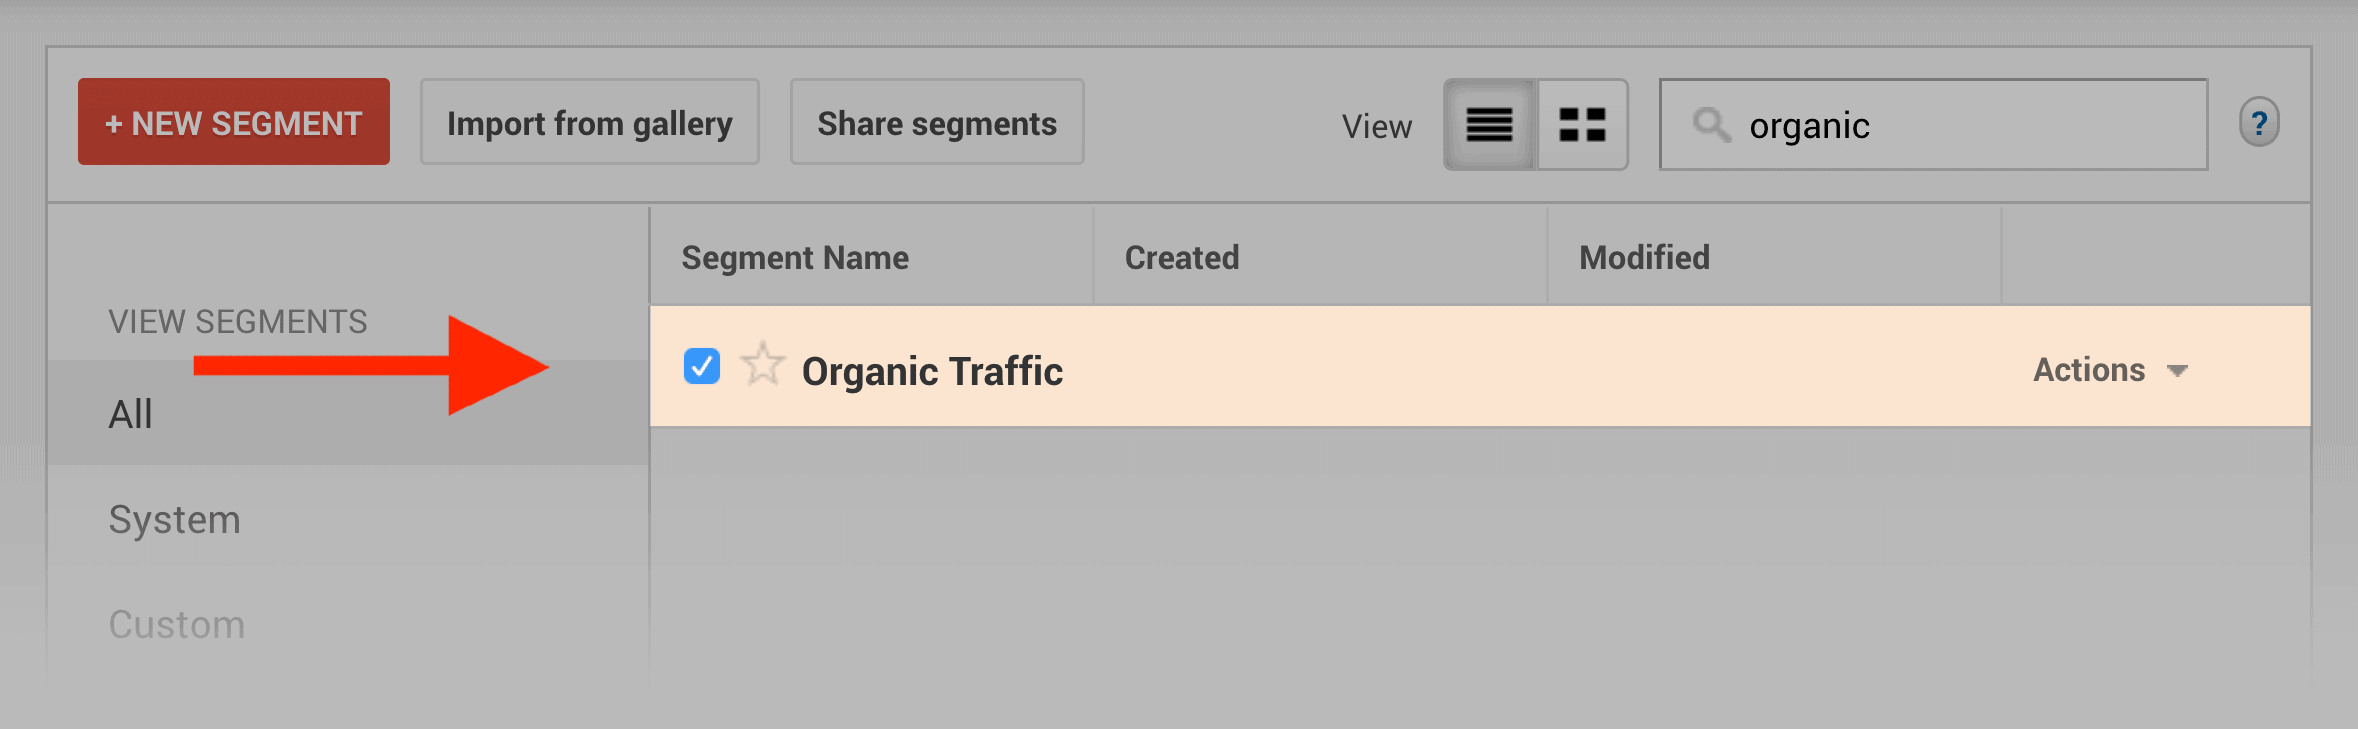 Organic Traffic filter